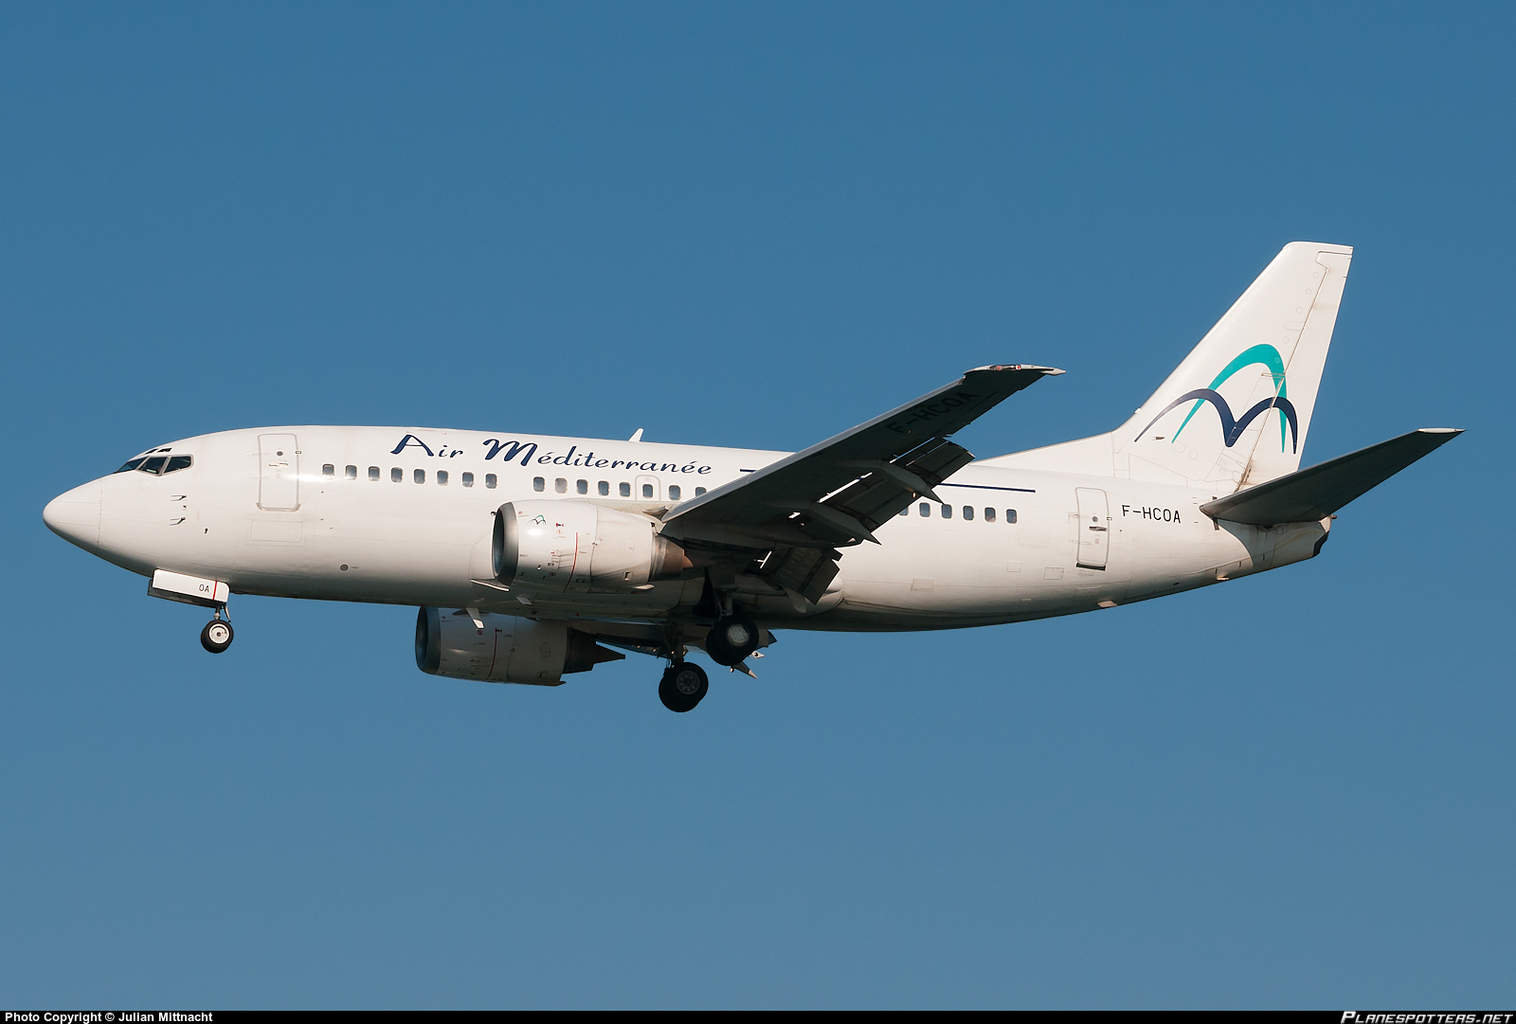 Air Méditerranée goes into liquidation